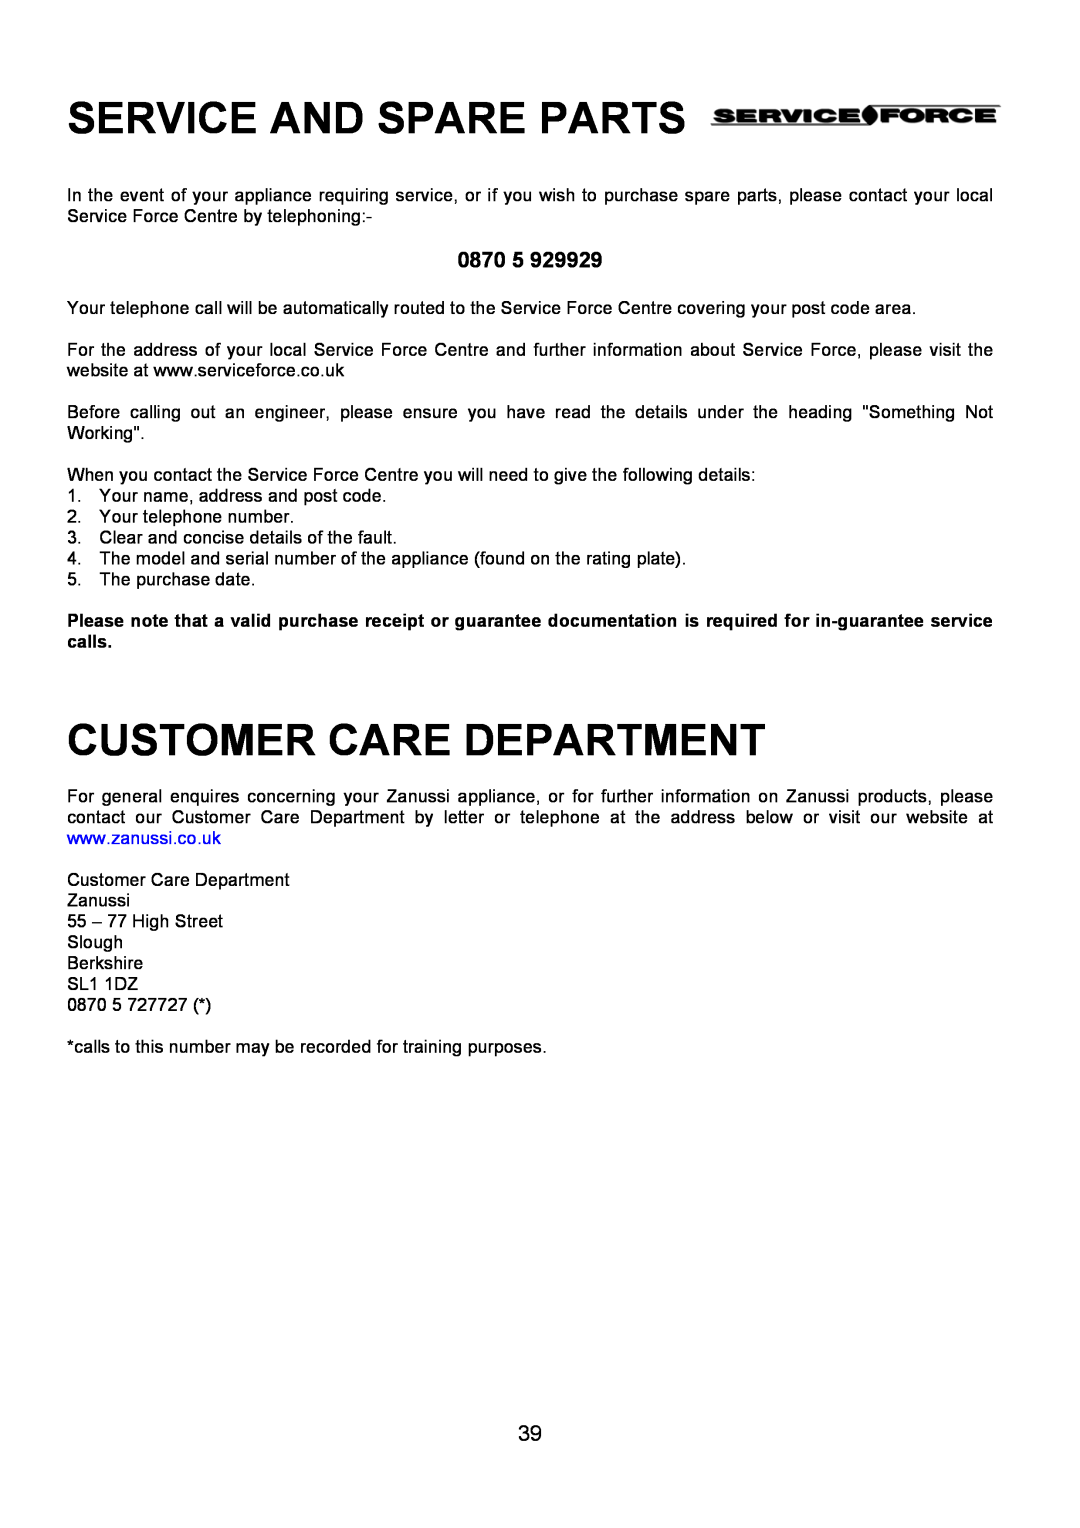 Zanussi ZDQ 695 manual 0870, Service And Spare Parts, Customer Care Department 